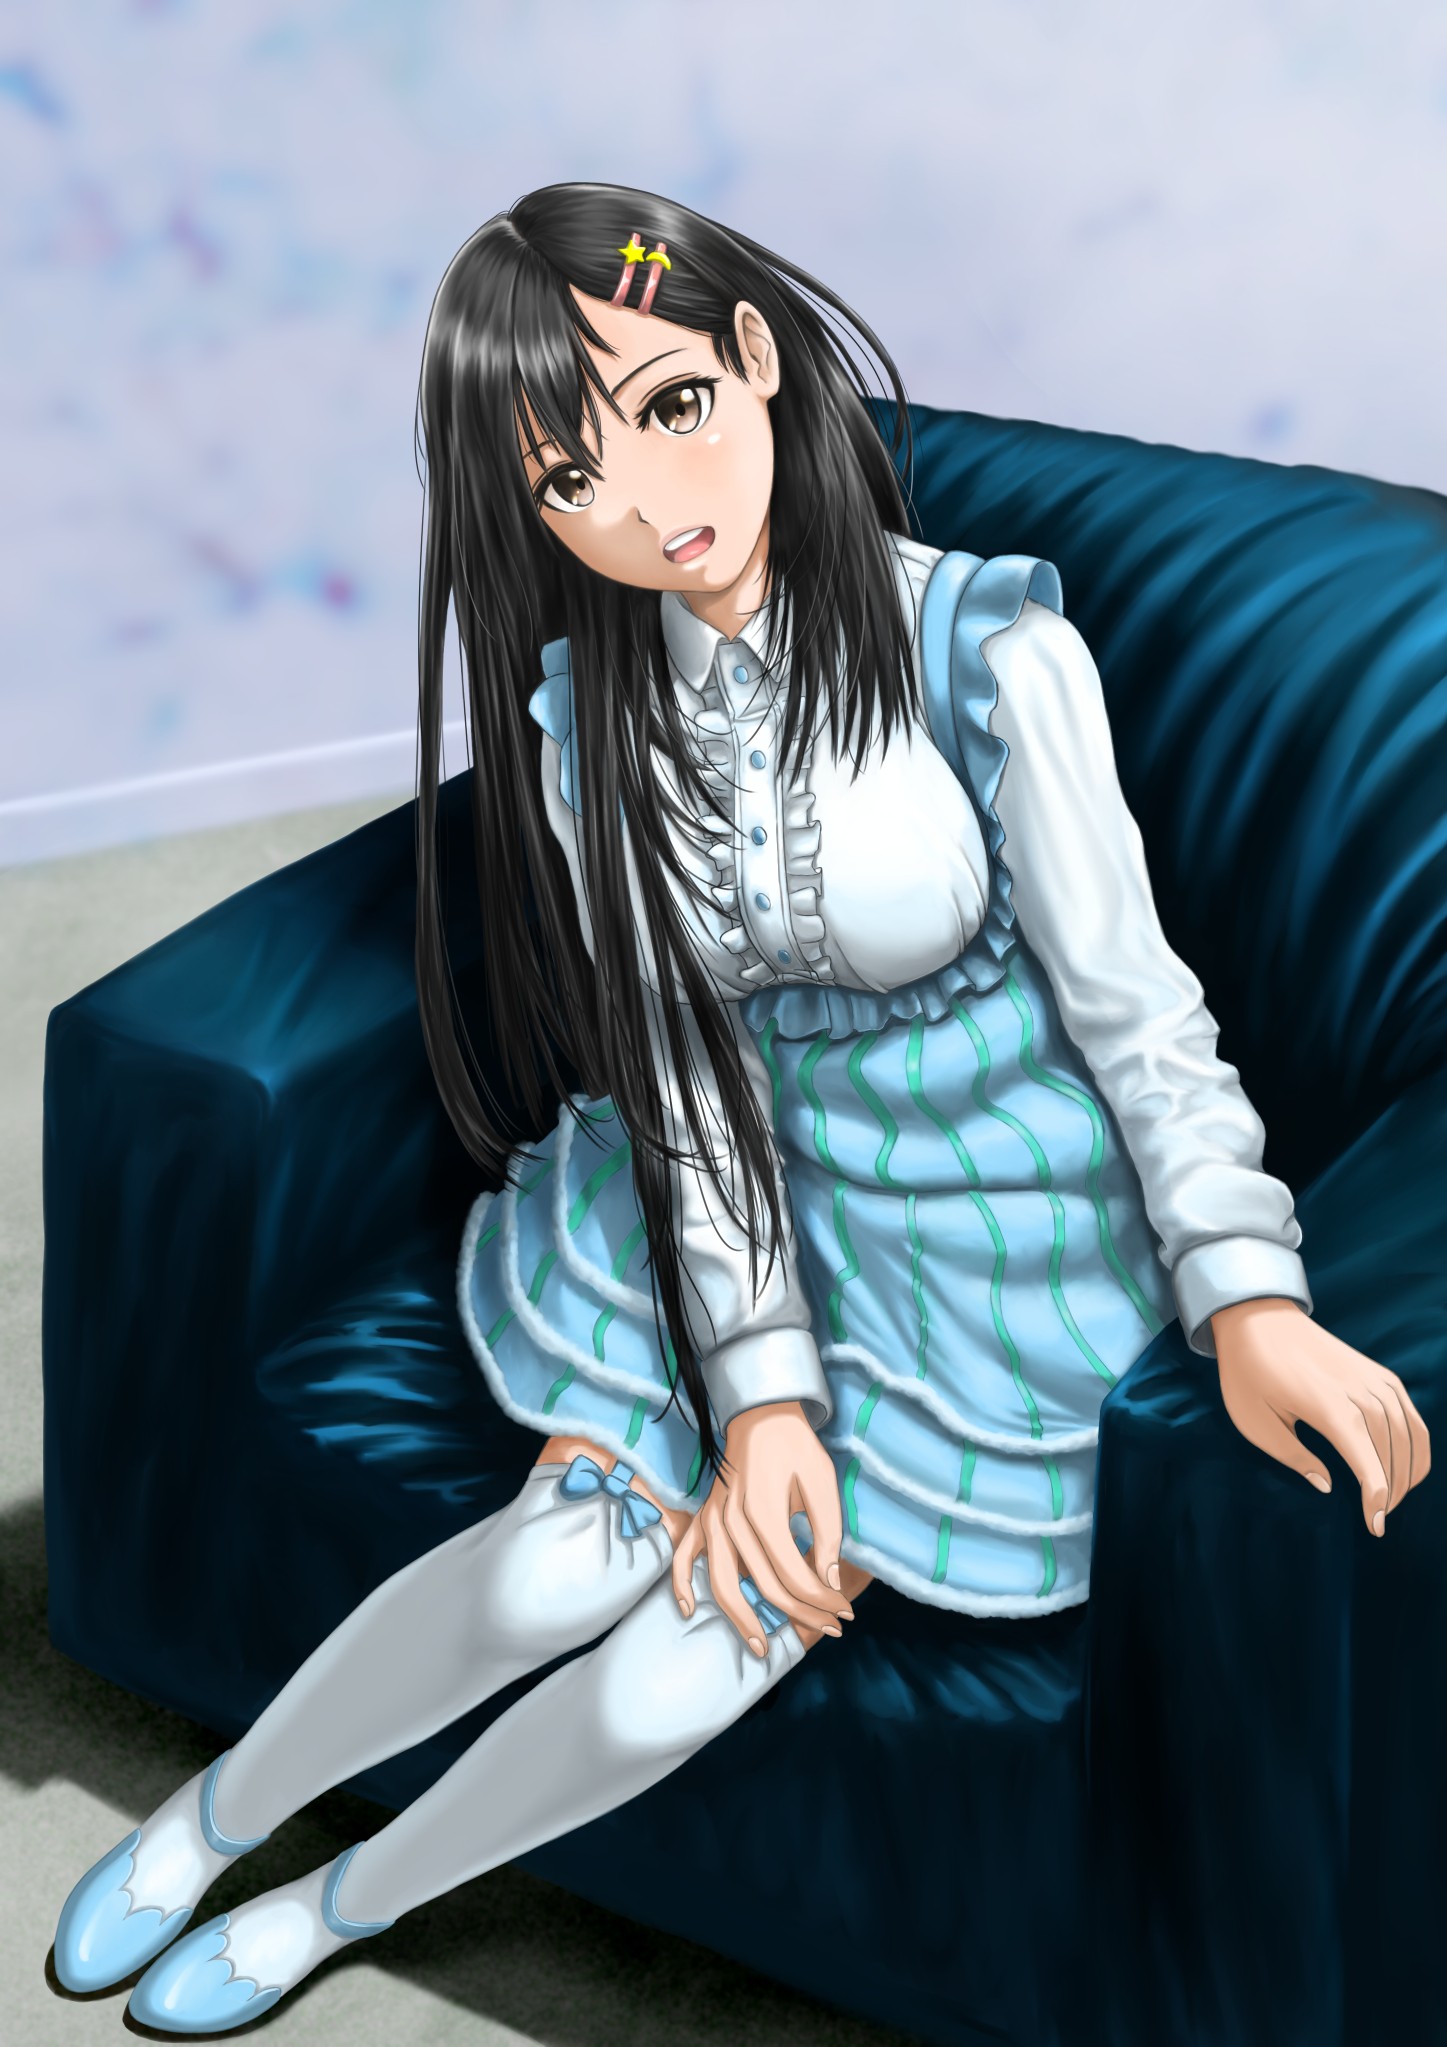 Anime 1447x2047 anime anime girls long hair brown eyes armchair cyan Pixiv black hair stockings open mouth women indoors dress